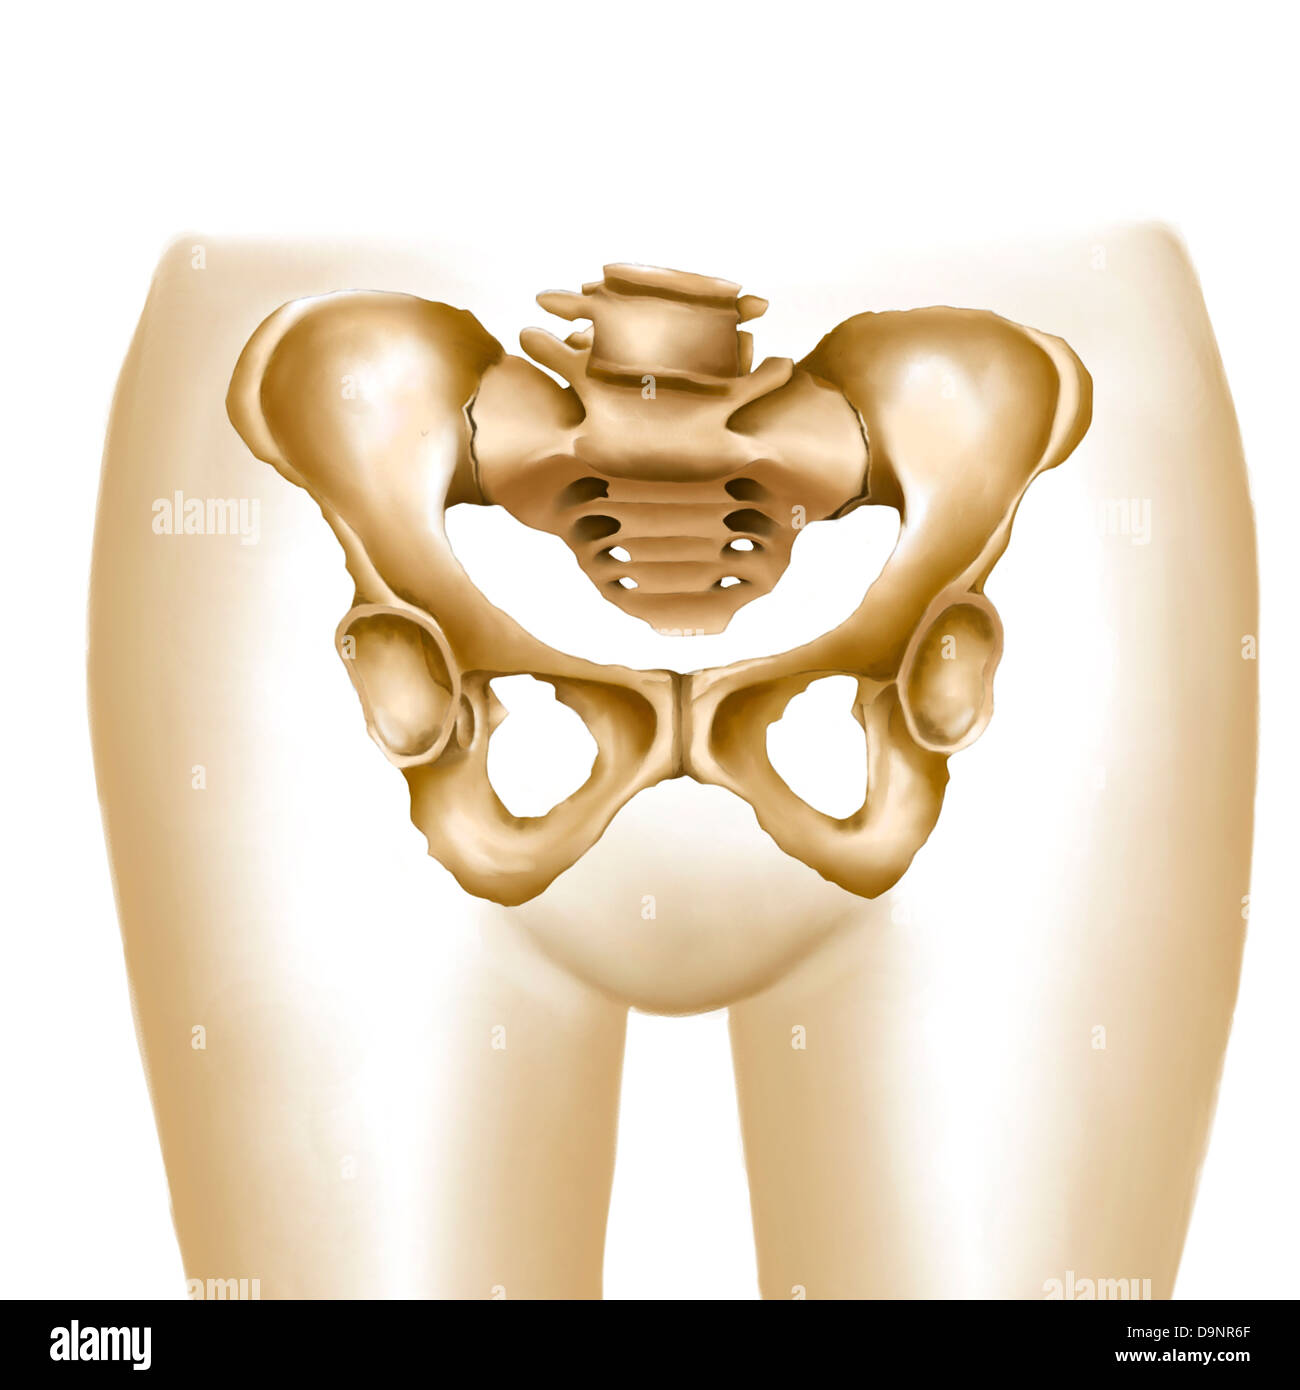 https://c8.alamy.com/comp/D9NR6F/anatomy-of-female-hips-and-pelvic-bones-D9NR6F.jpg